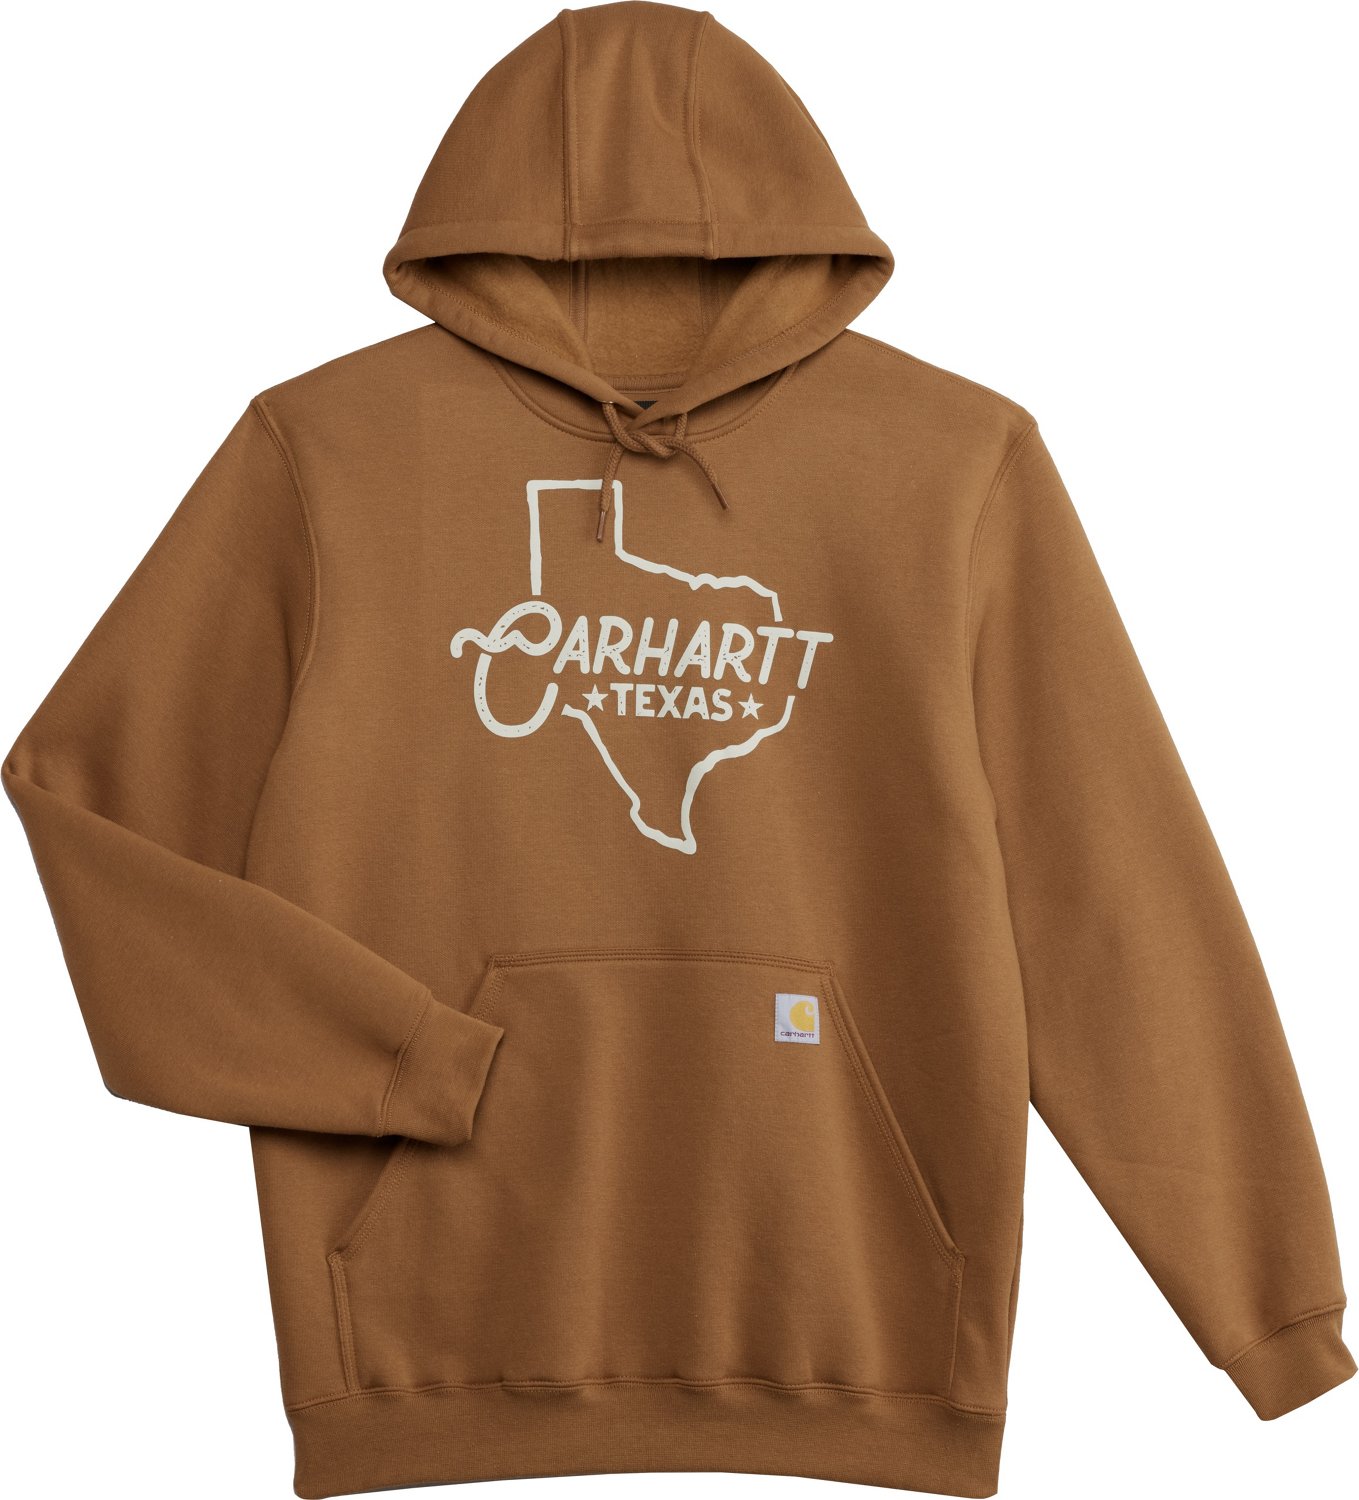 Carhartt Mens Texas Midweight Graphic Sweatshirt